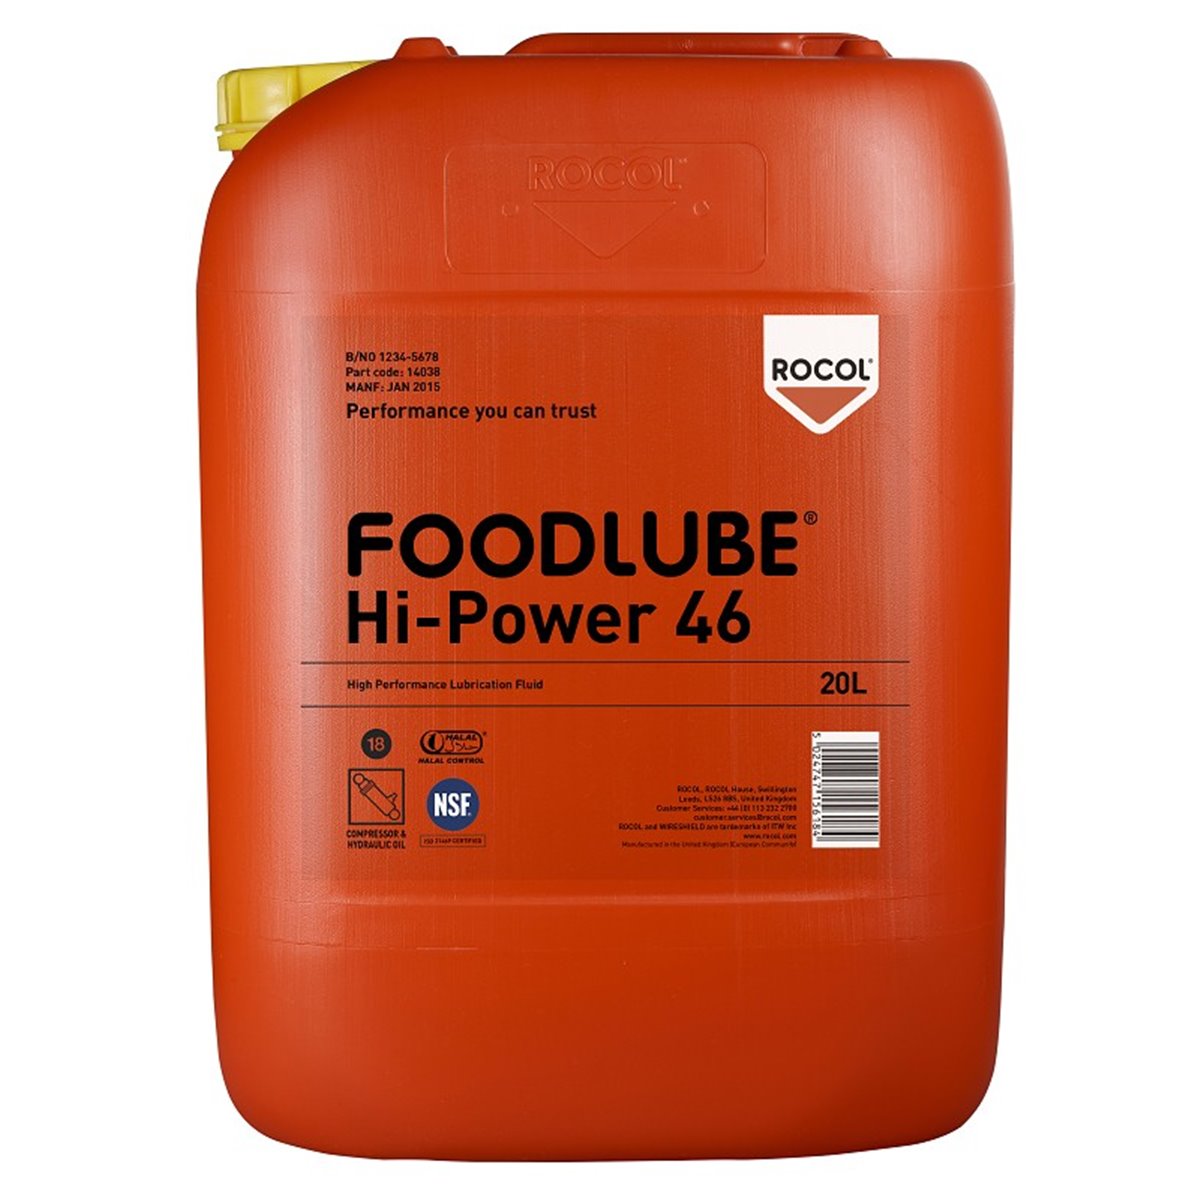 FOODLUBE Hi-Power 46 Rocol 20l RS15995